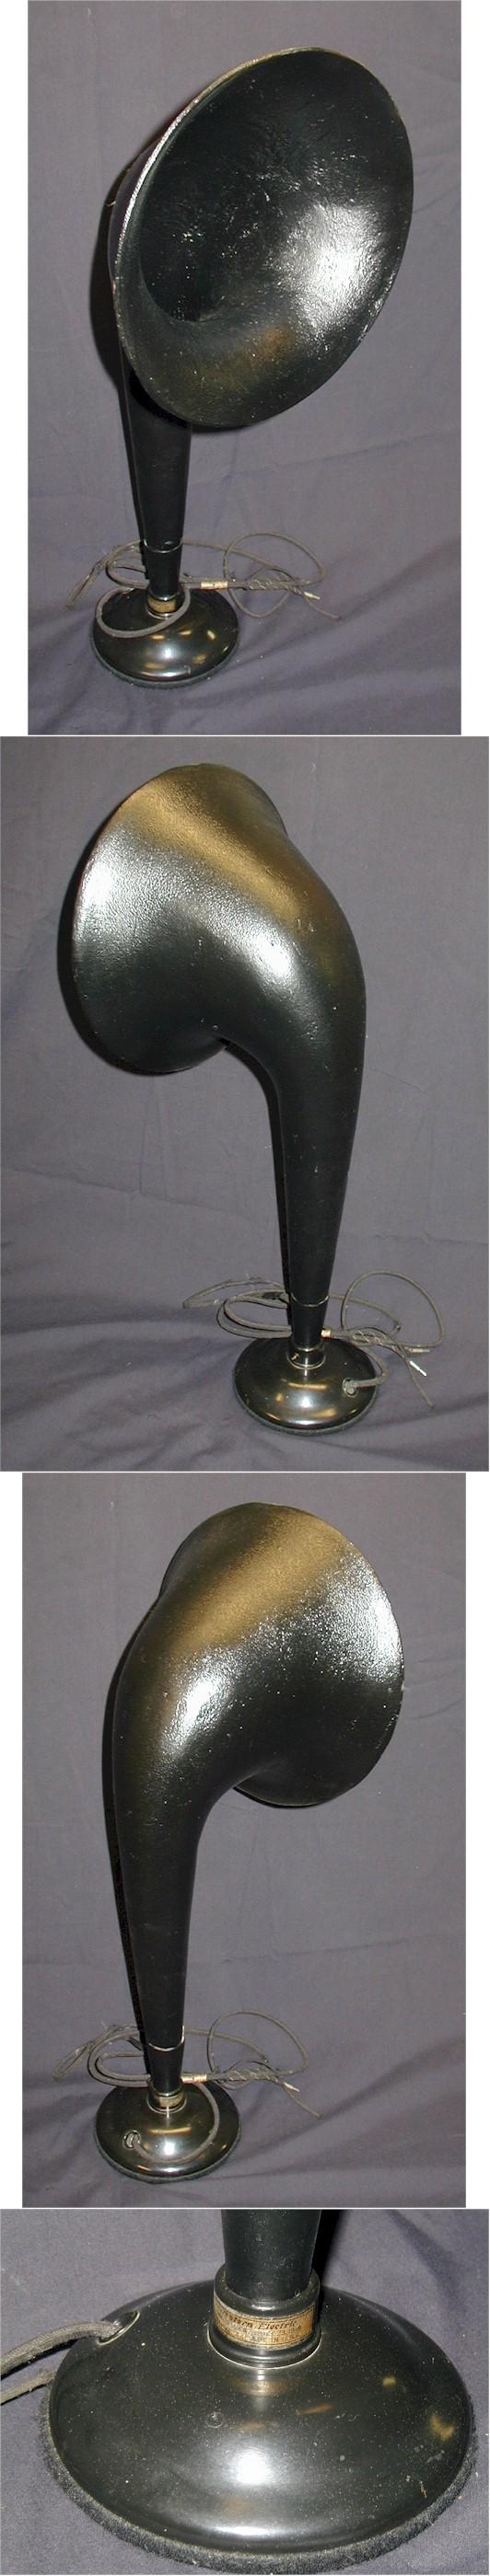 Western Electric 521-CW Horn Speaker (1922)